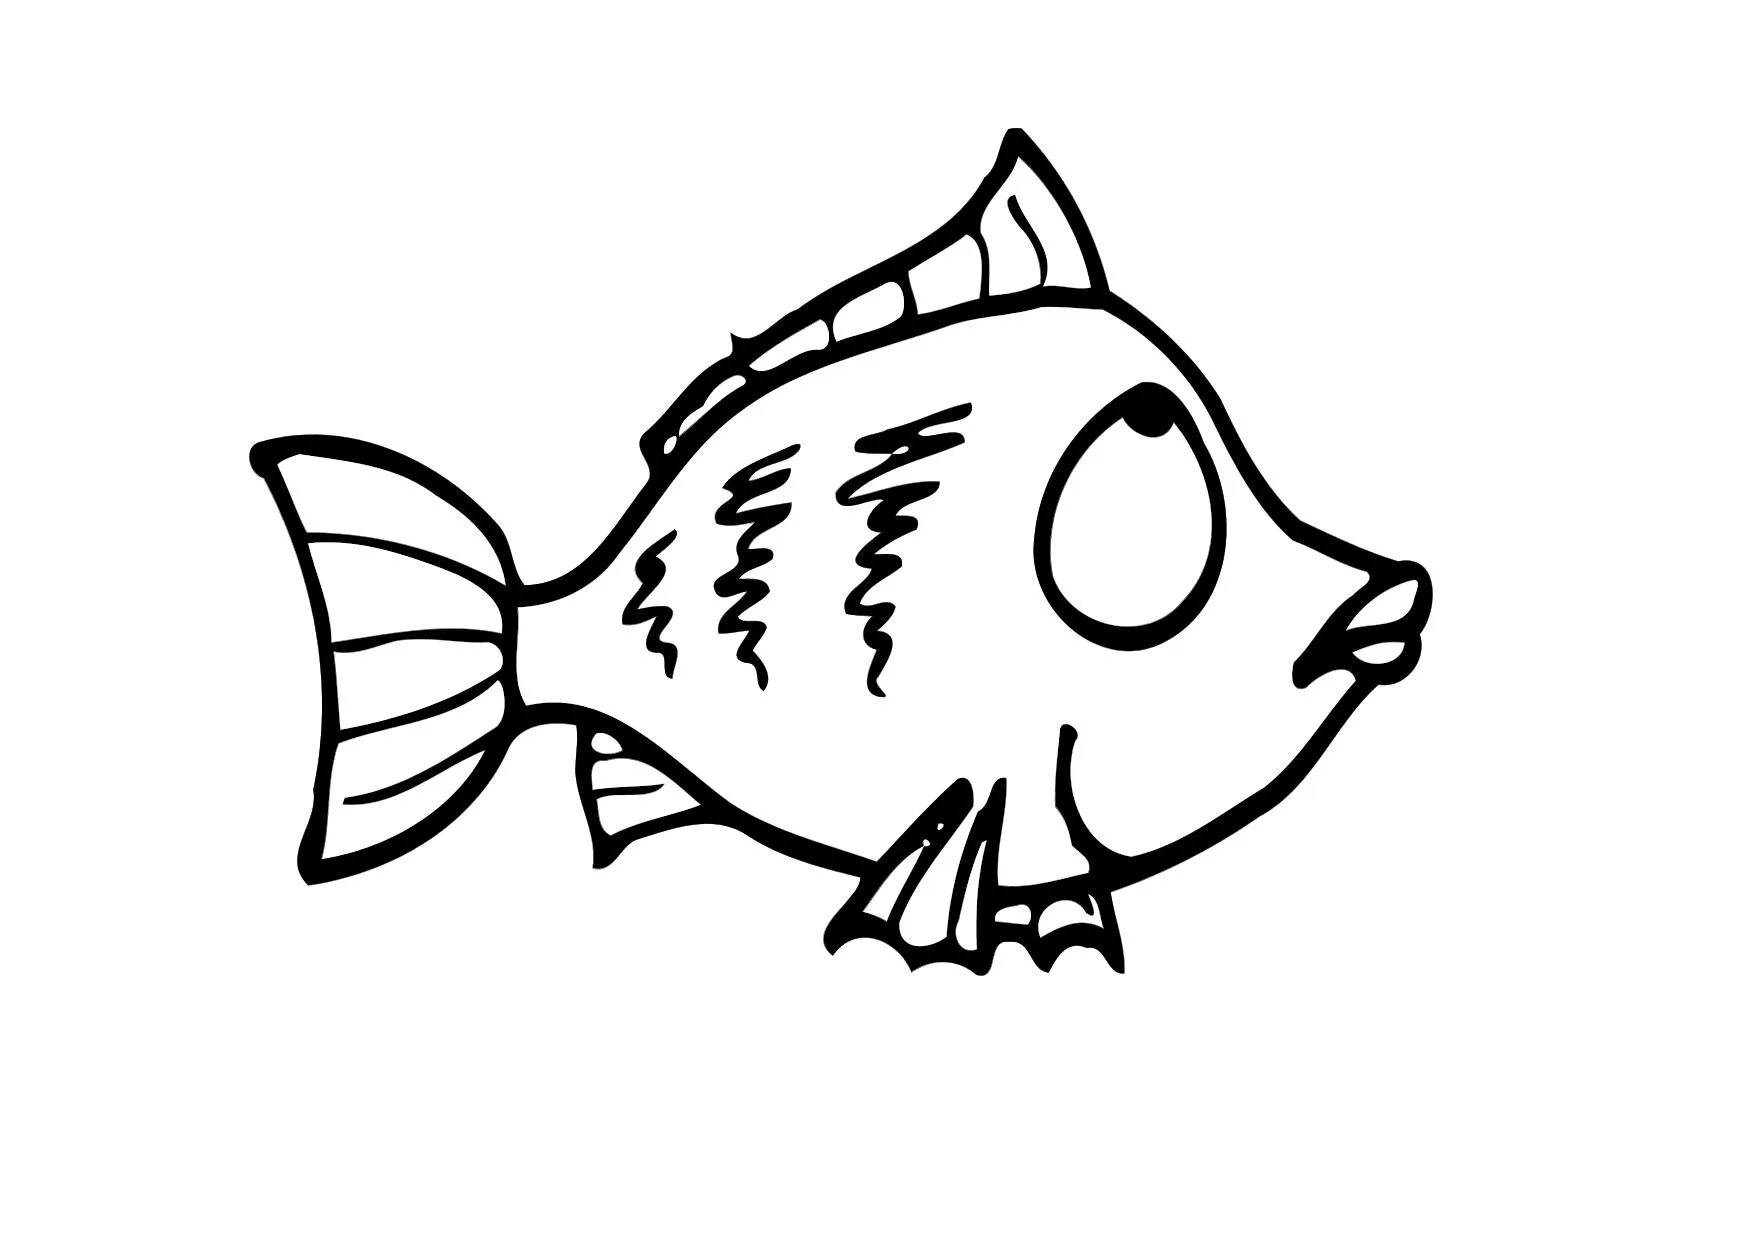 Была рыбка простая. Рыба рисунок. Раскраска рыбка. Рисунок рыбки для раскрашивания. Рыбка рисунок карандашом.